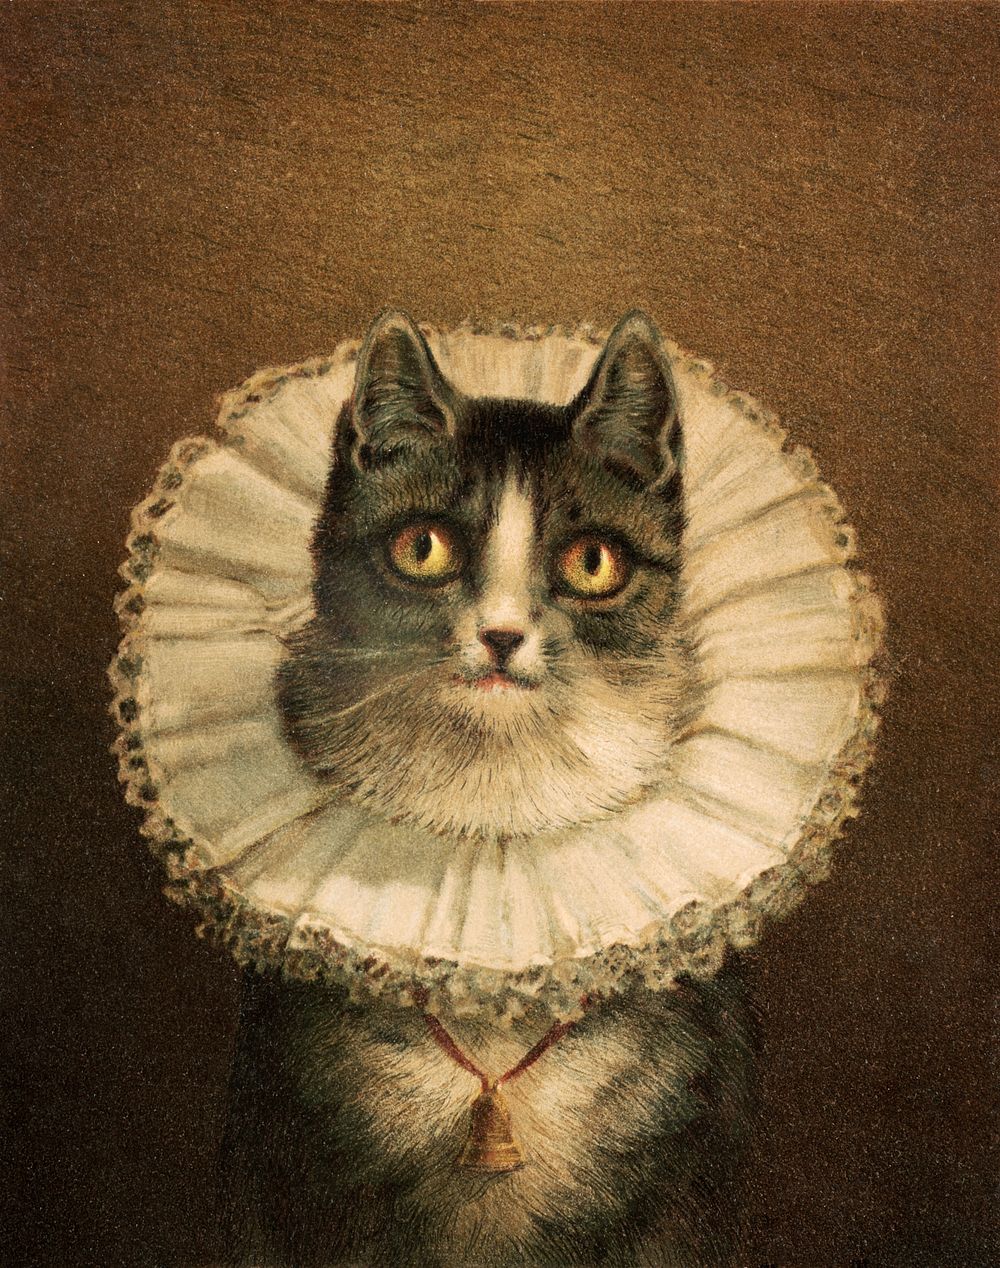 The widow (1861&ndash;1897), vintage cat portrait illustration by L. Prang & Co. Original public domain image from Digital…